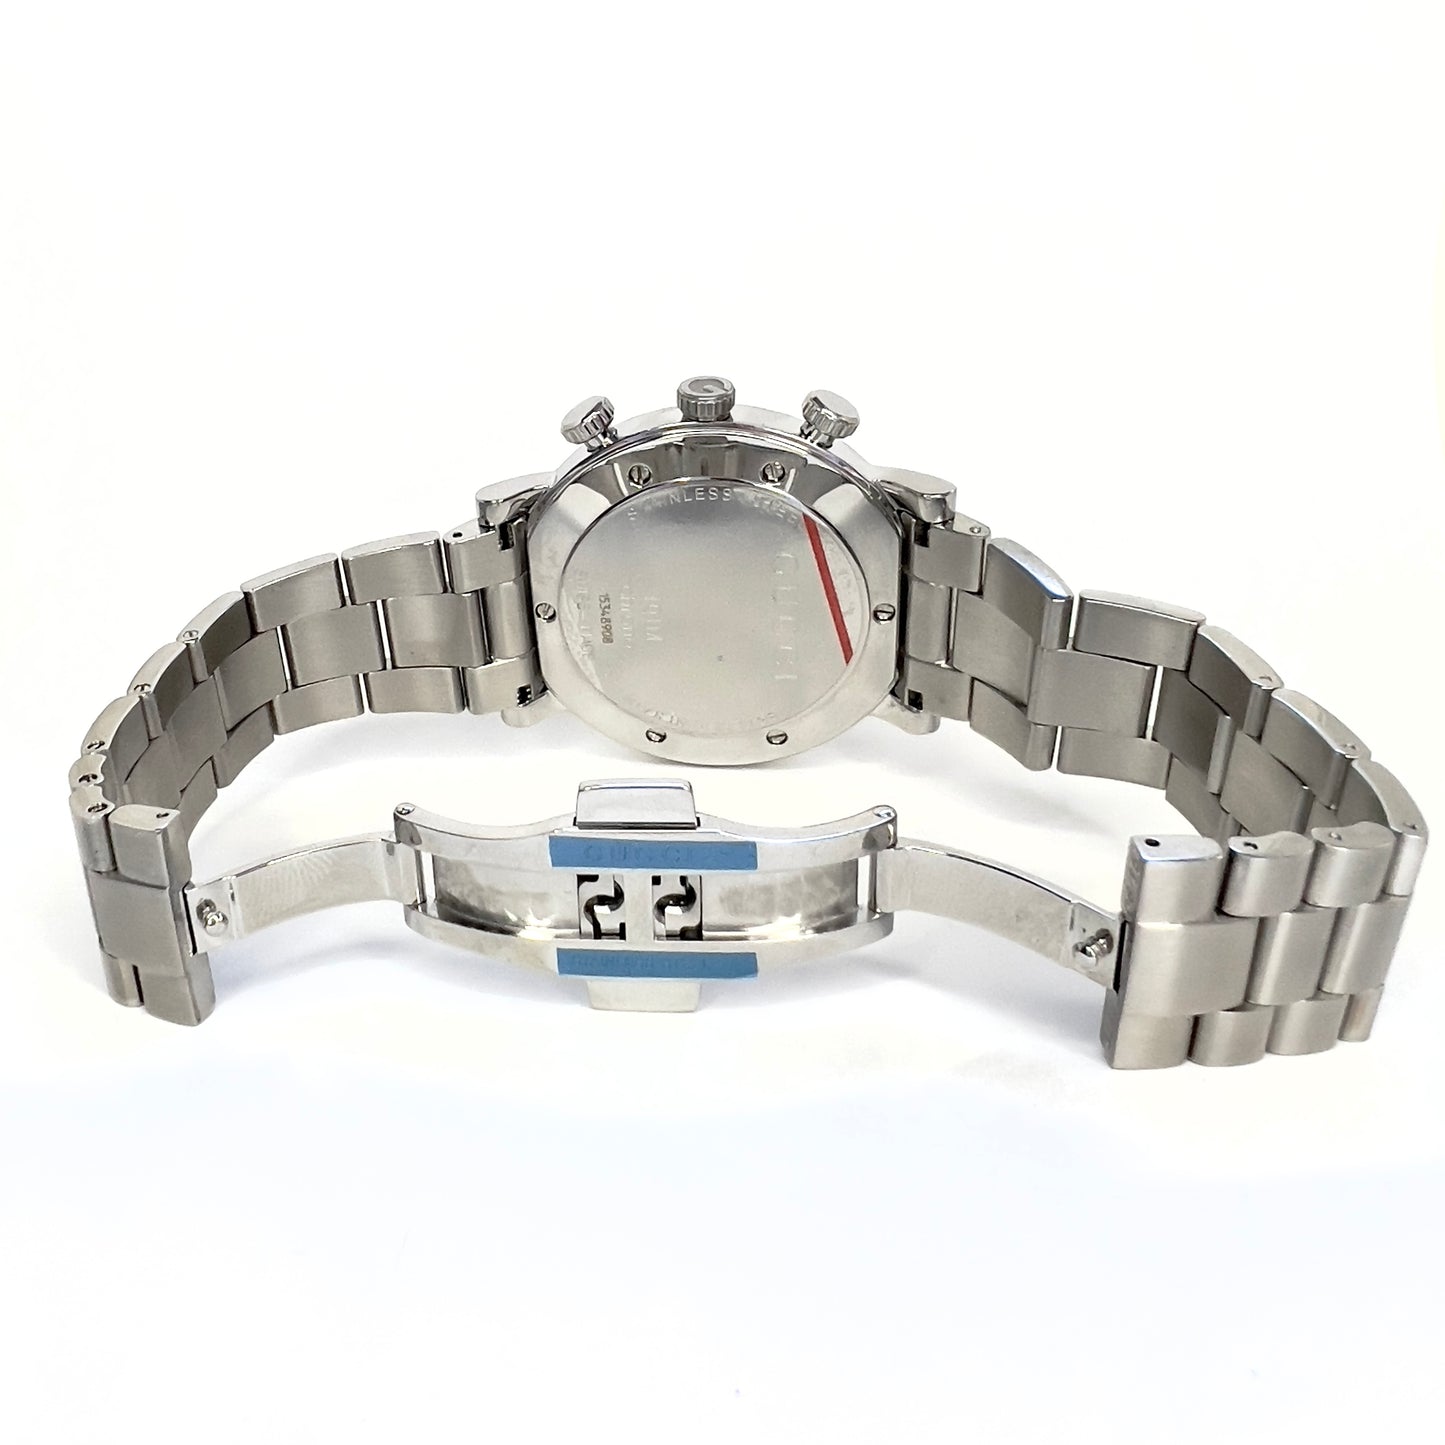 GUCCI G Chronograph Quartz 44mm Steel 3.65TCW Diamond Watch